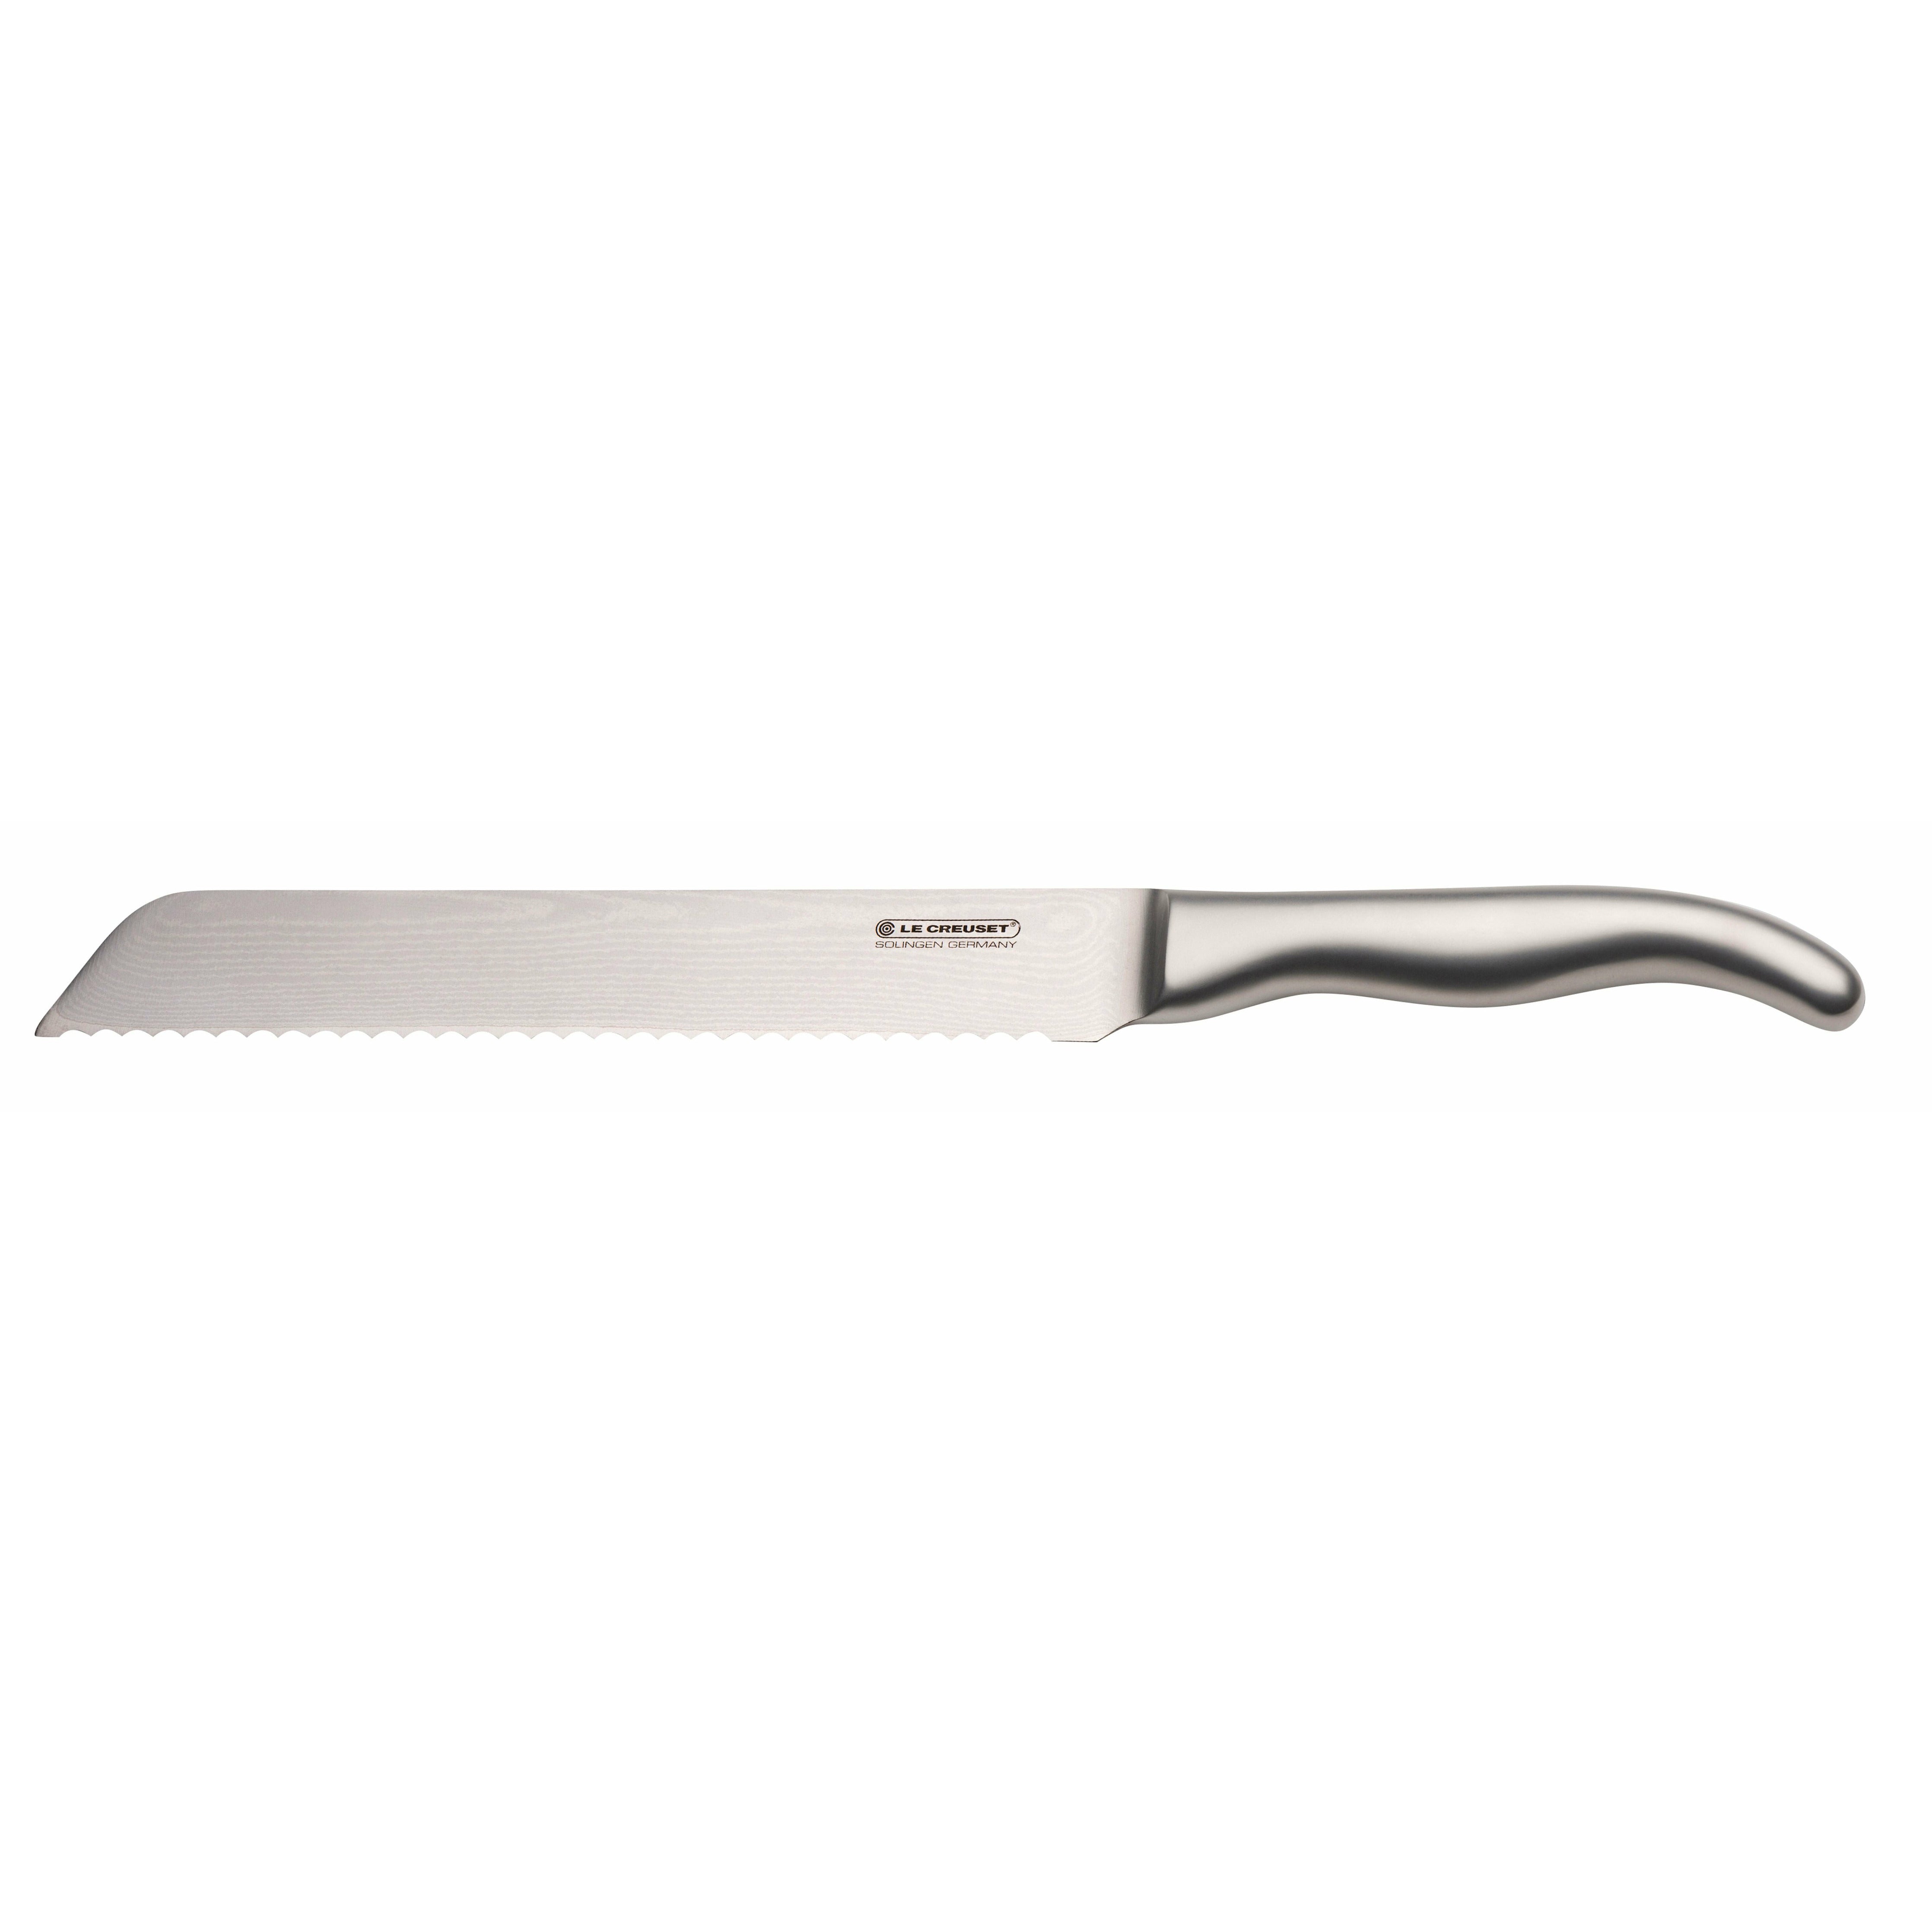 Manija de acero inoxidable con cuchillo de pan de Le Creuset, 20 cm